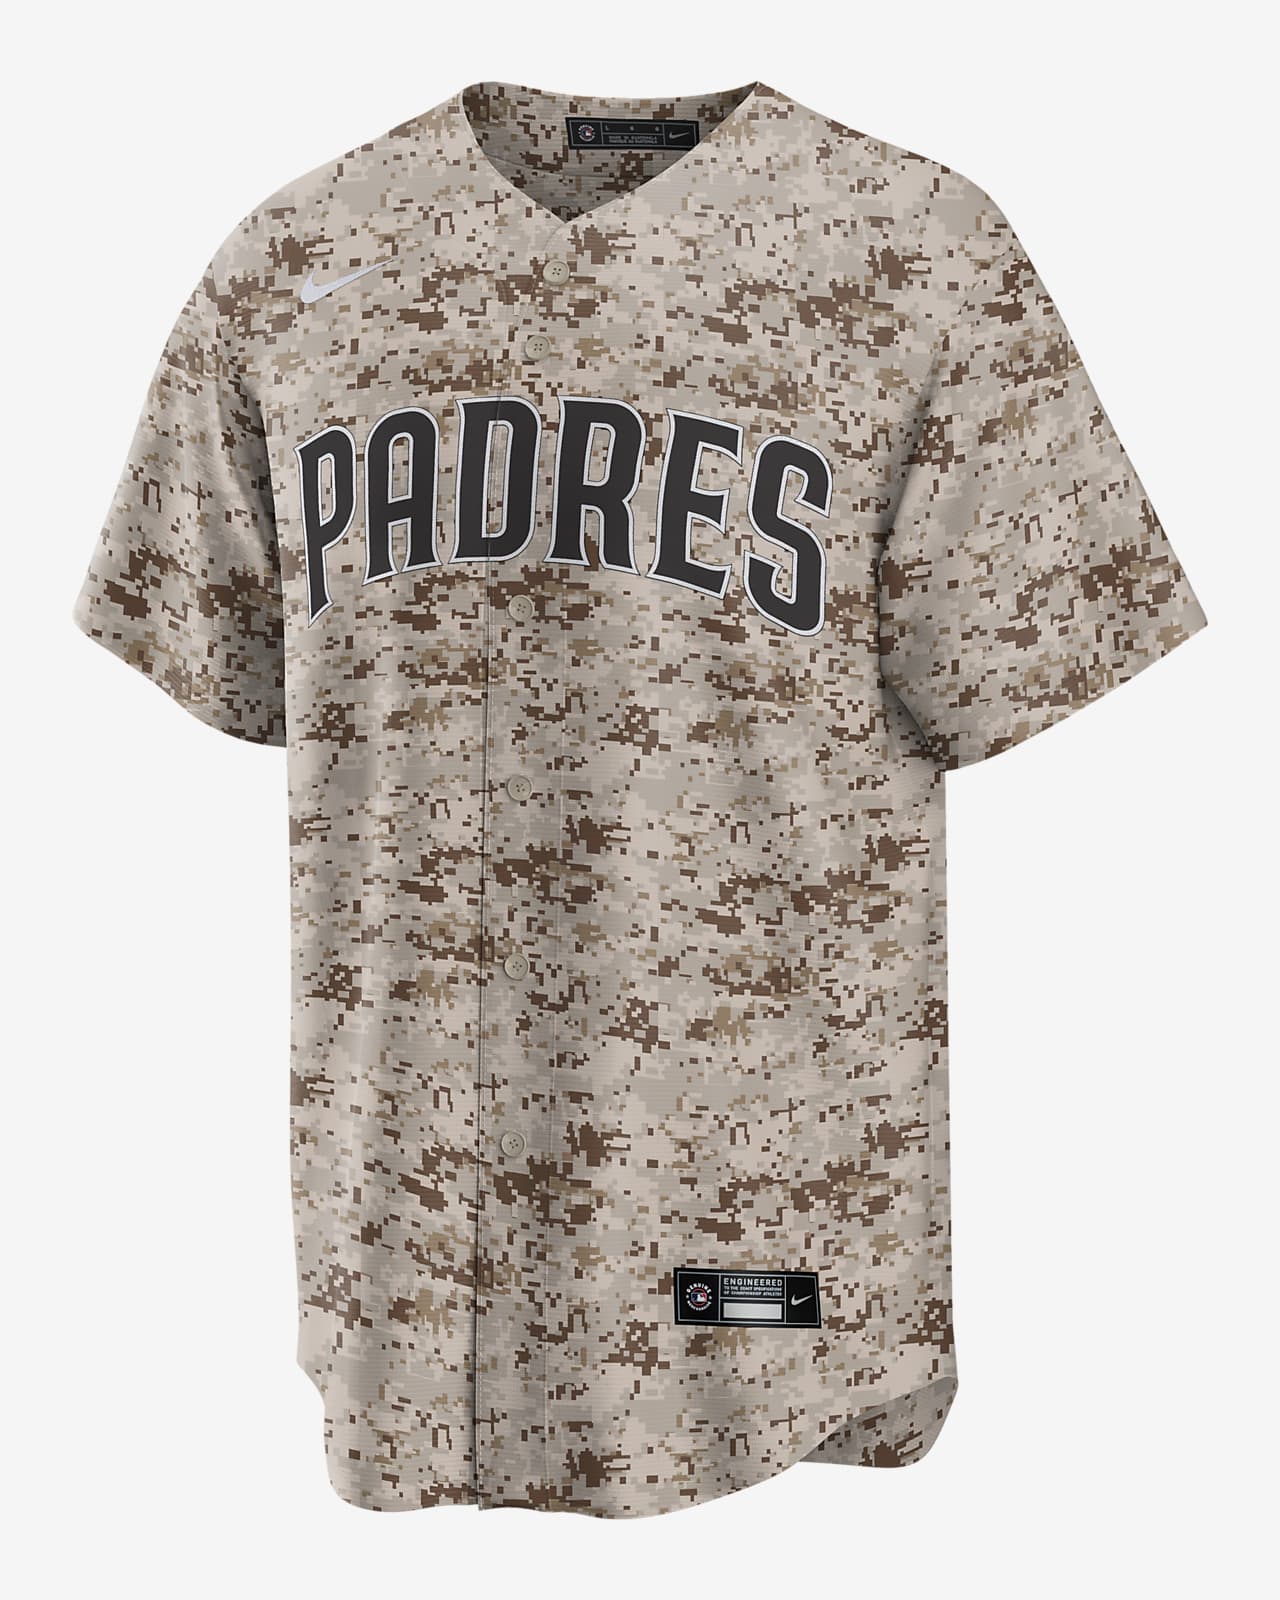 Jersey Nike de la MLB Replica para hombre San Diego Padres USMC